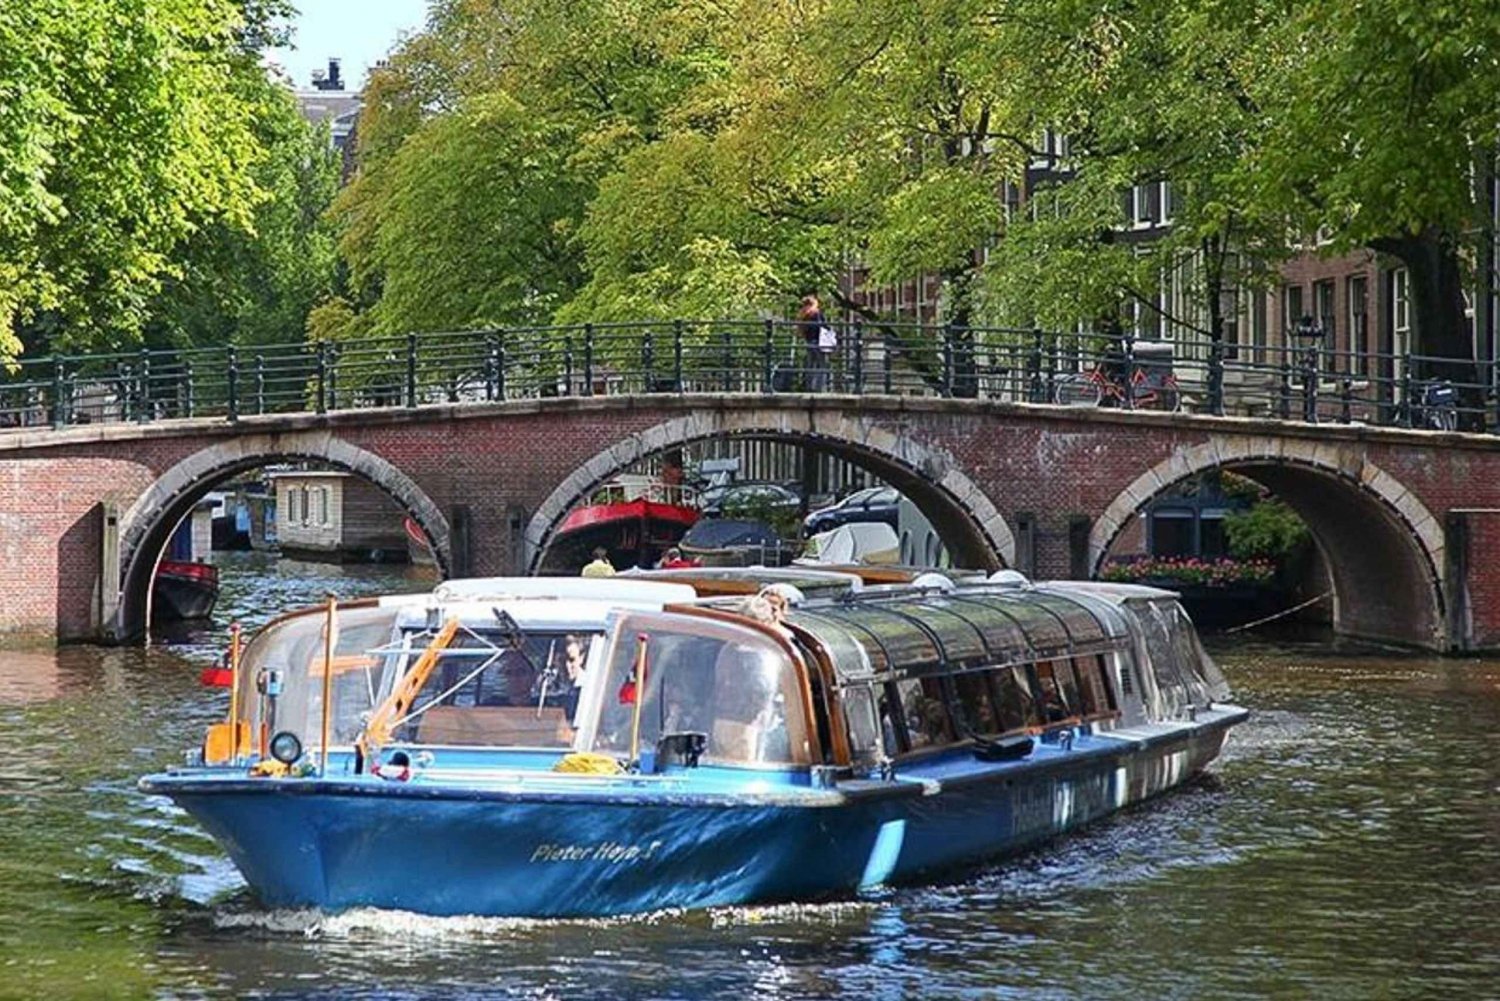 Amsterdam City Private Orientation Walking Tour